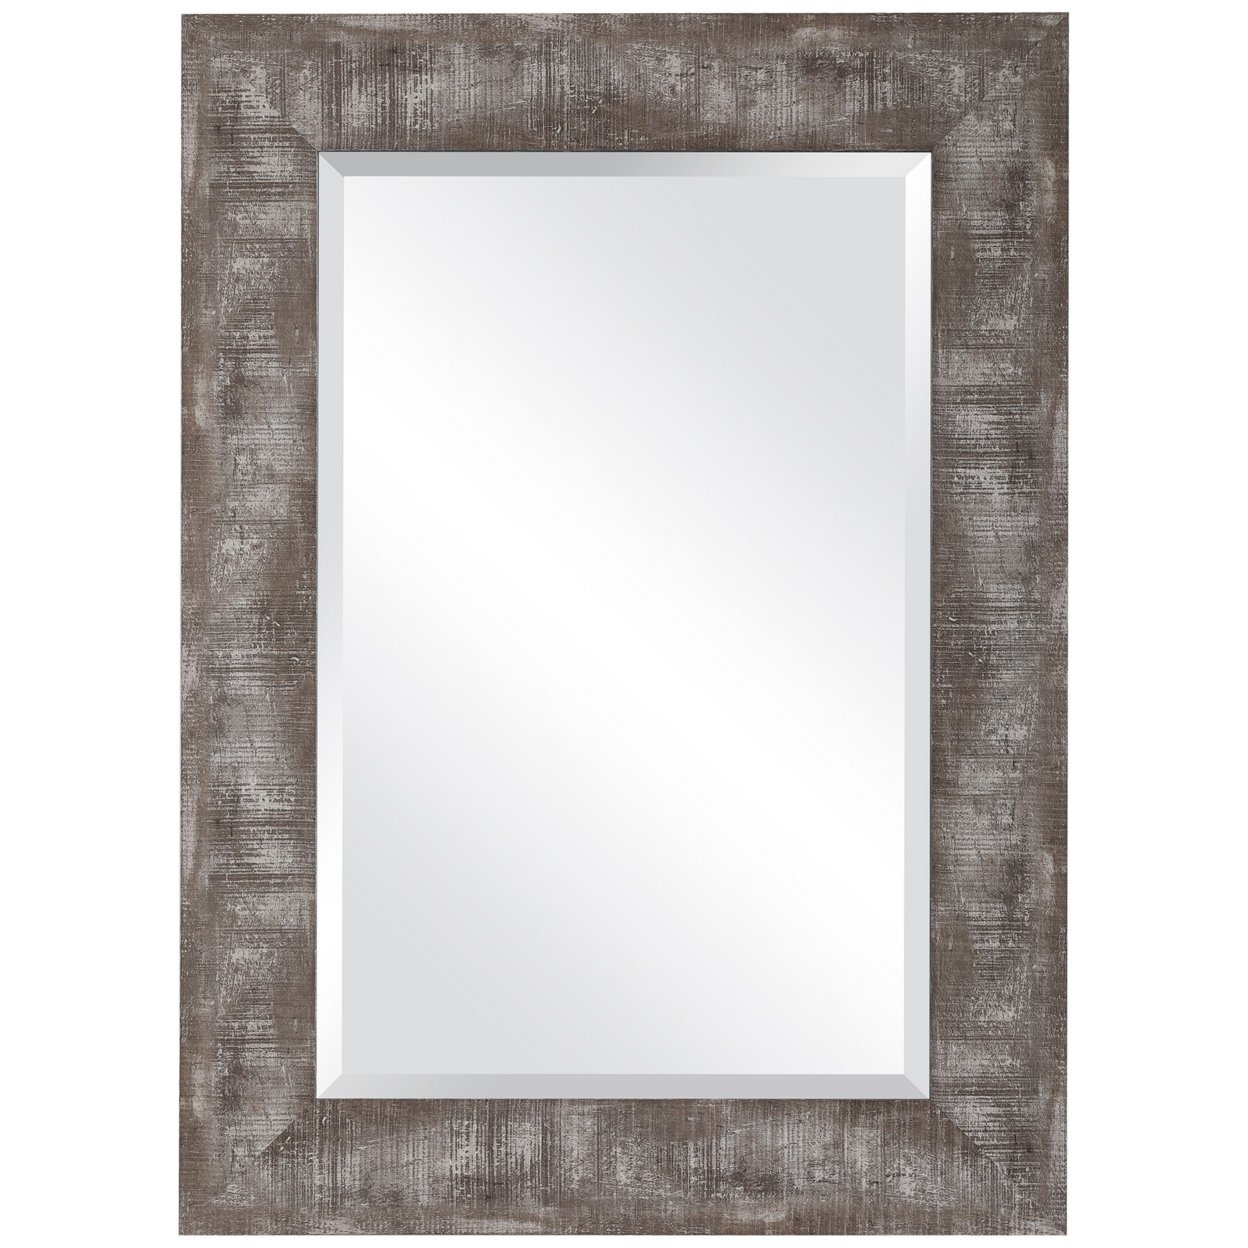 26 Inch Rustic Wooden Frame Mirror, Light Brown- Saltoro Sherpi